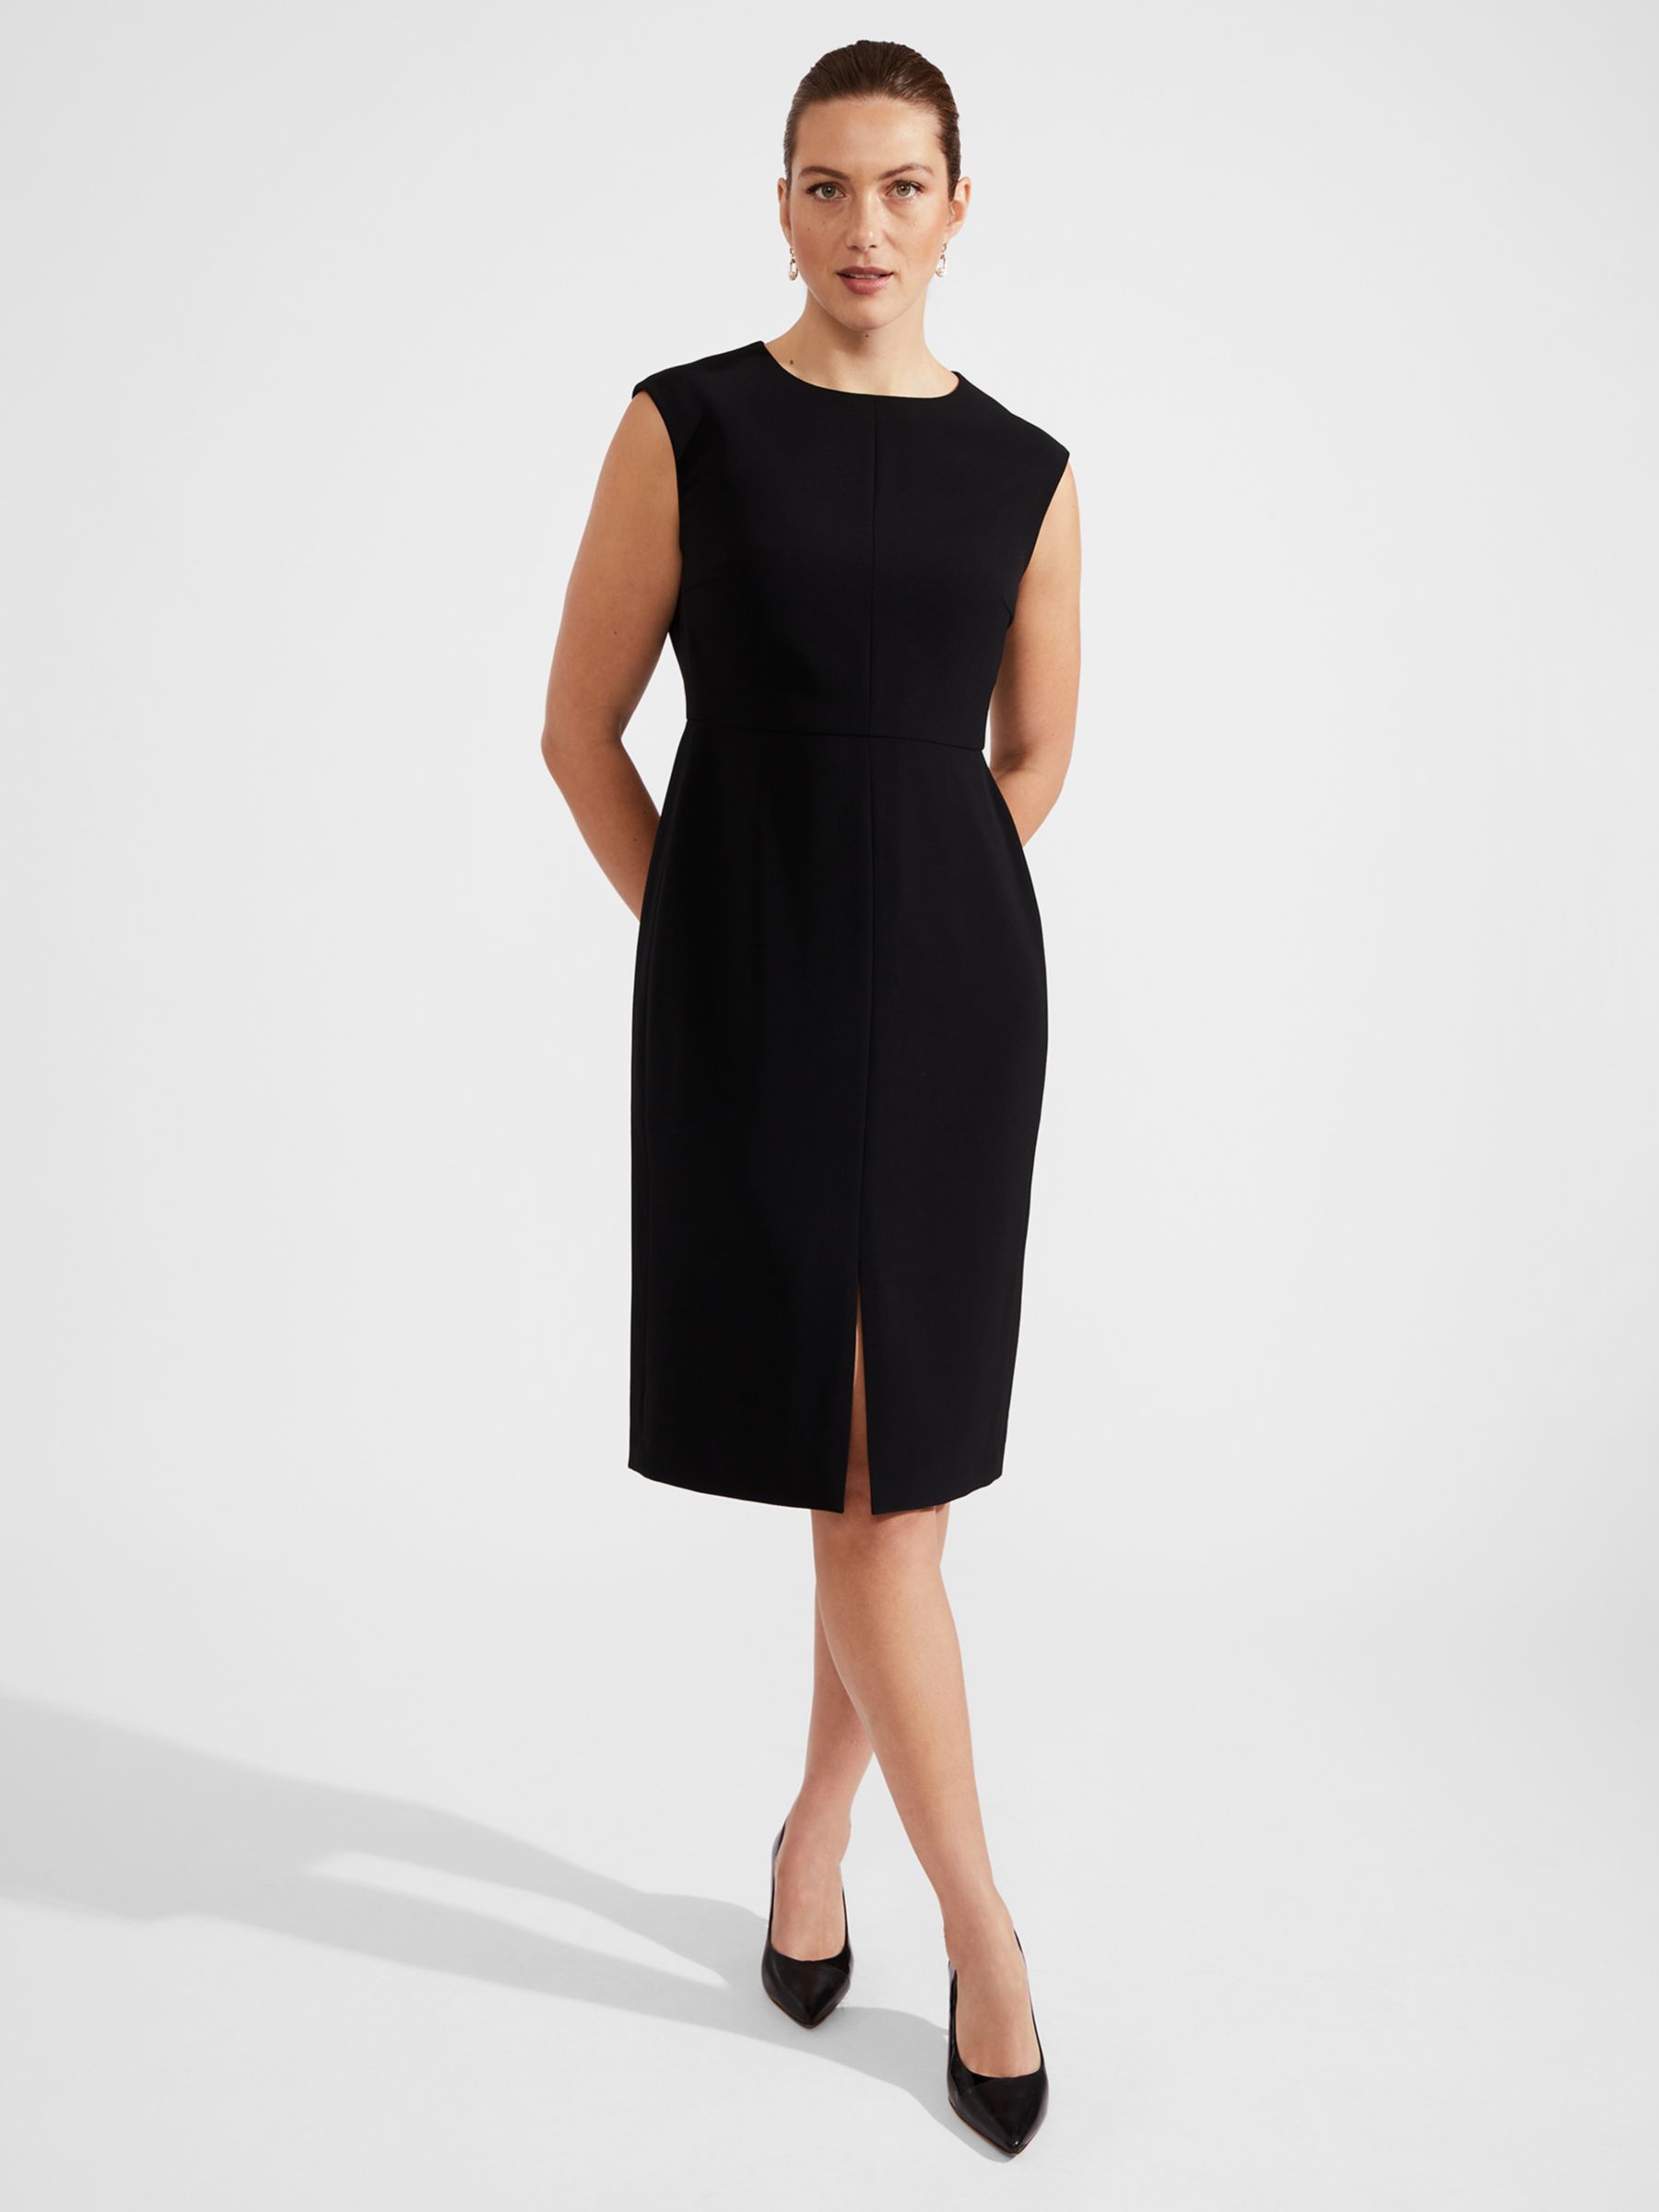 Hobbs Vanessa Midi Dress, Black at John Lewis & Partners